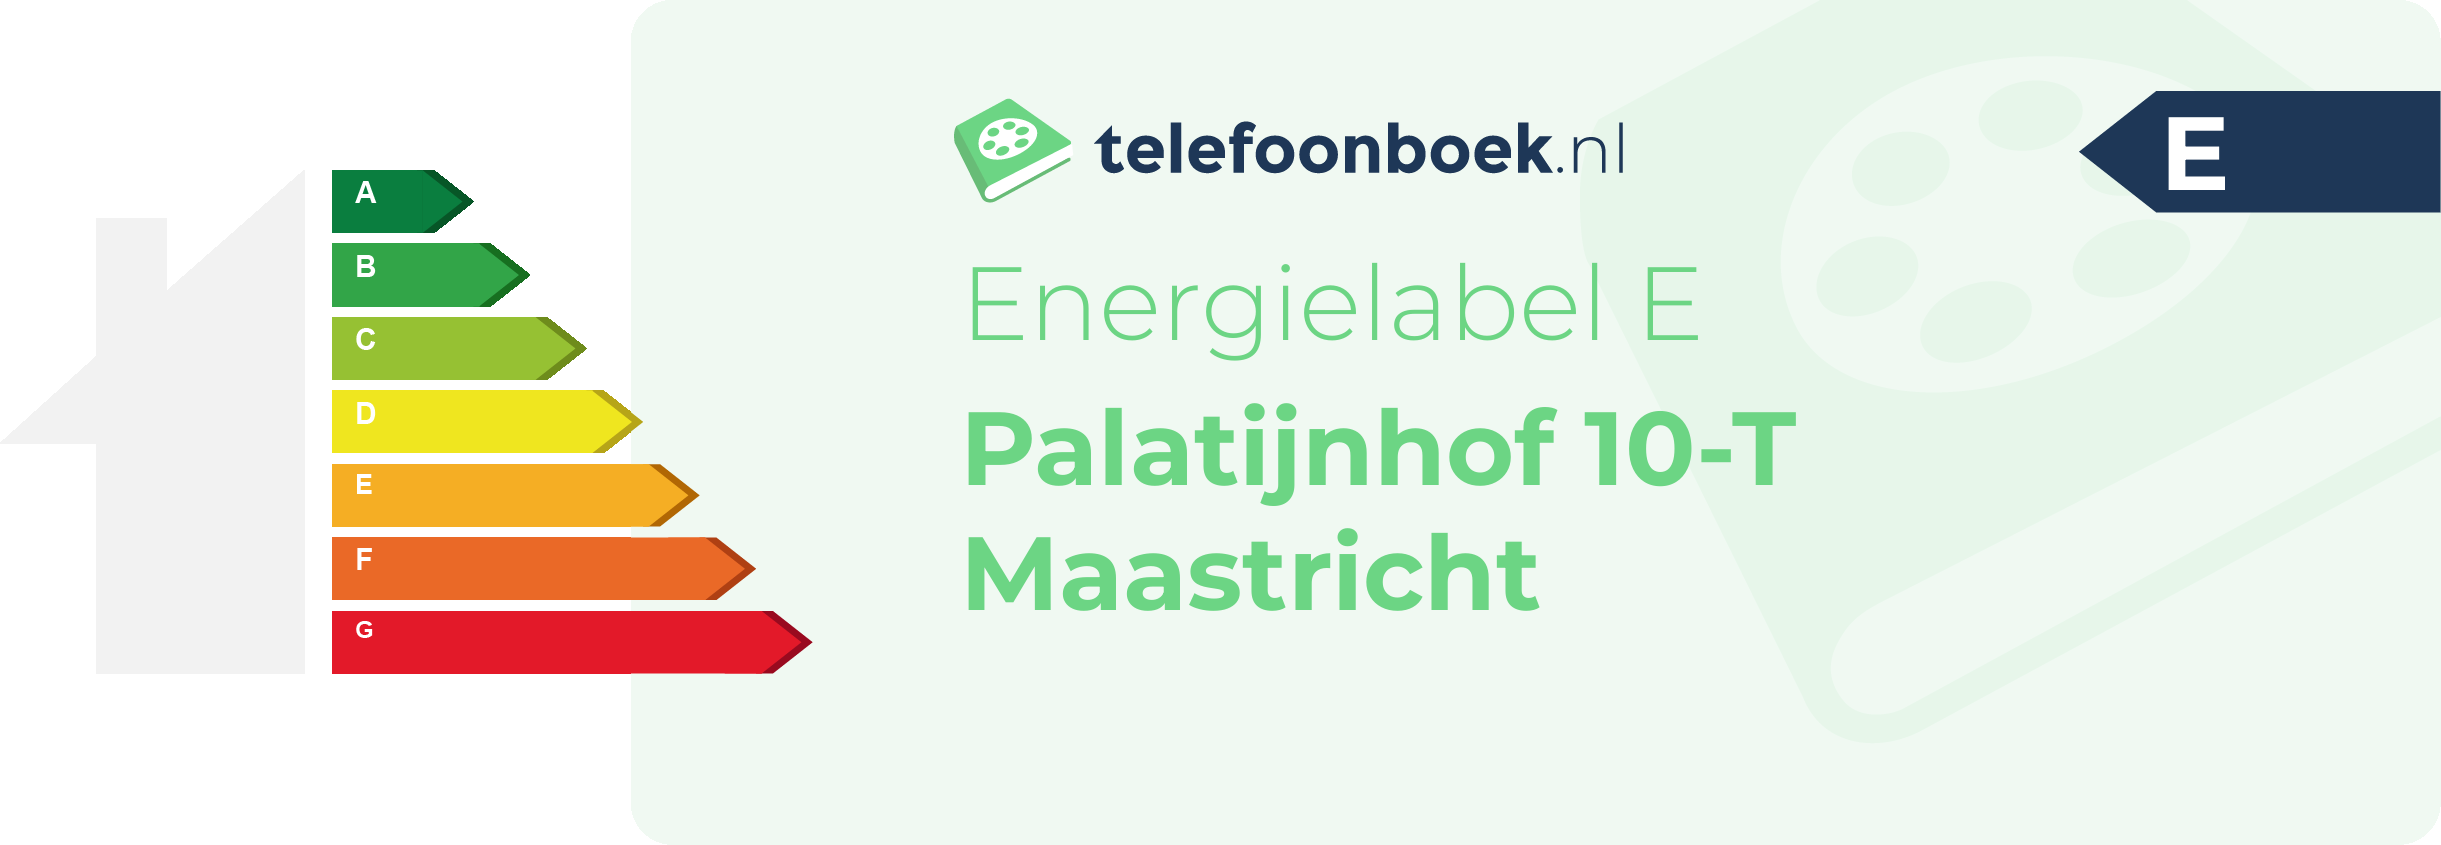 Energielabel Palatijnhof 10-T Maastricht